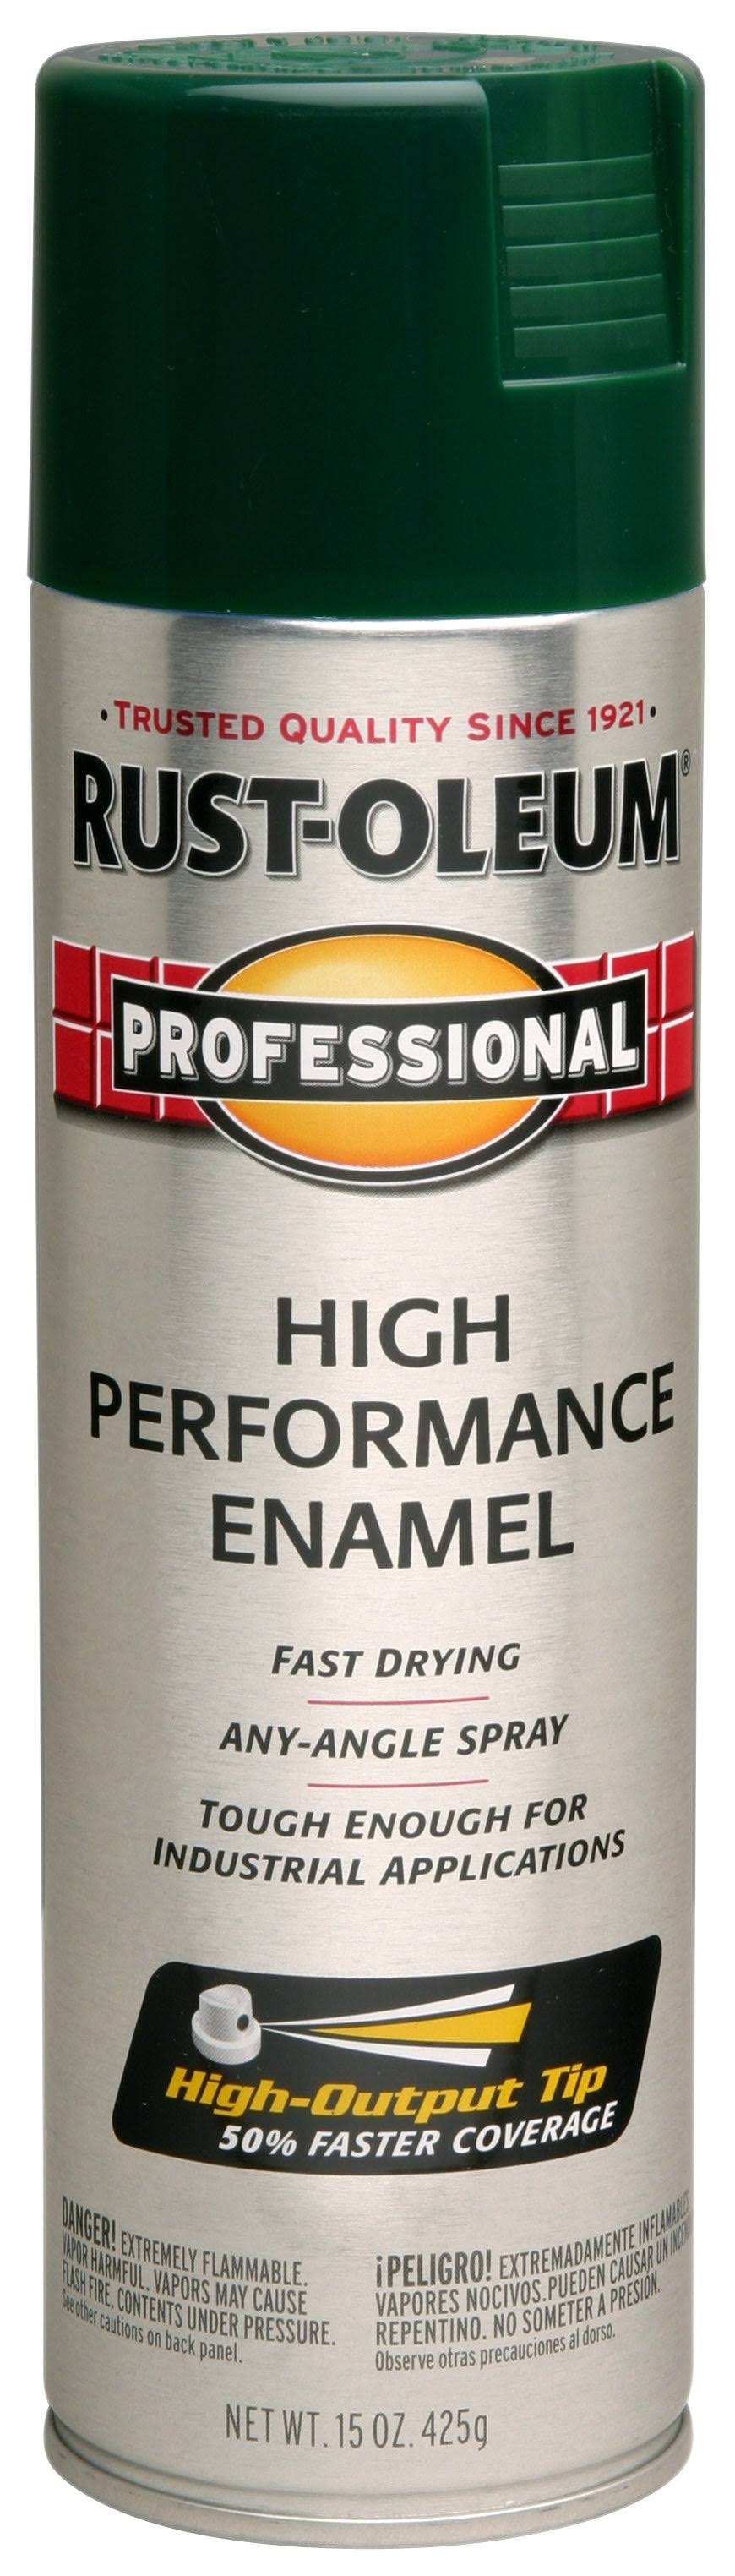 Rustoleum Professional High Performance Enamel Spray - Dark Green, 15oz